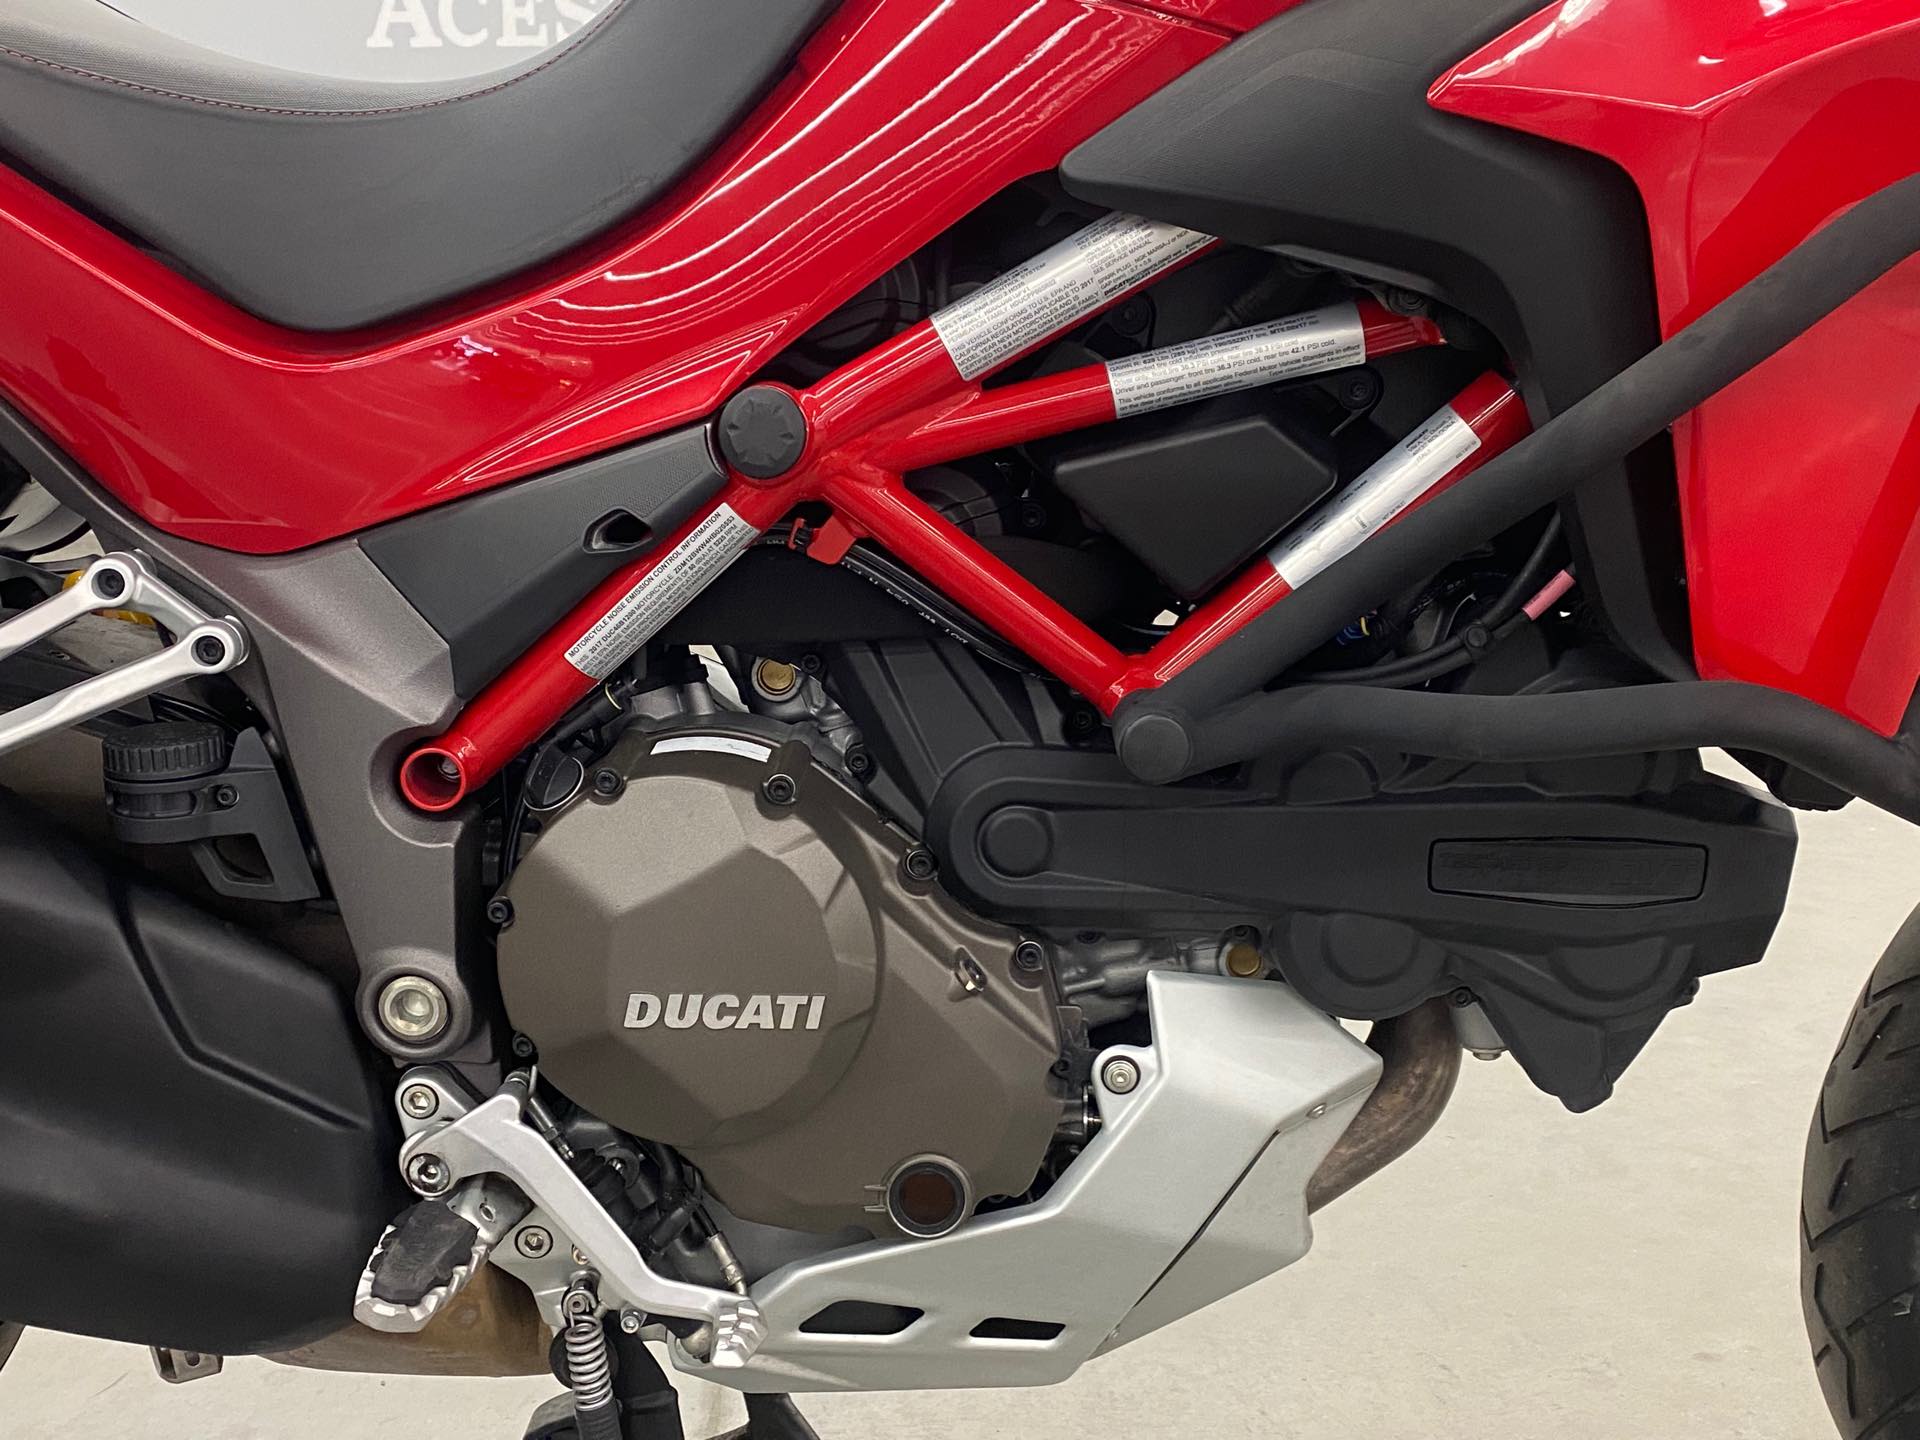 2017 Ducati Multistrada 1200 S at Aces Motorcycles Denver 